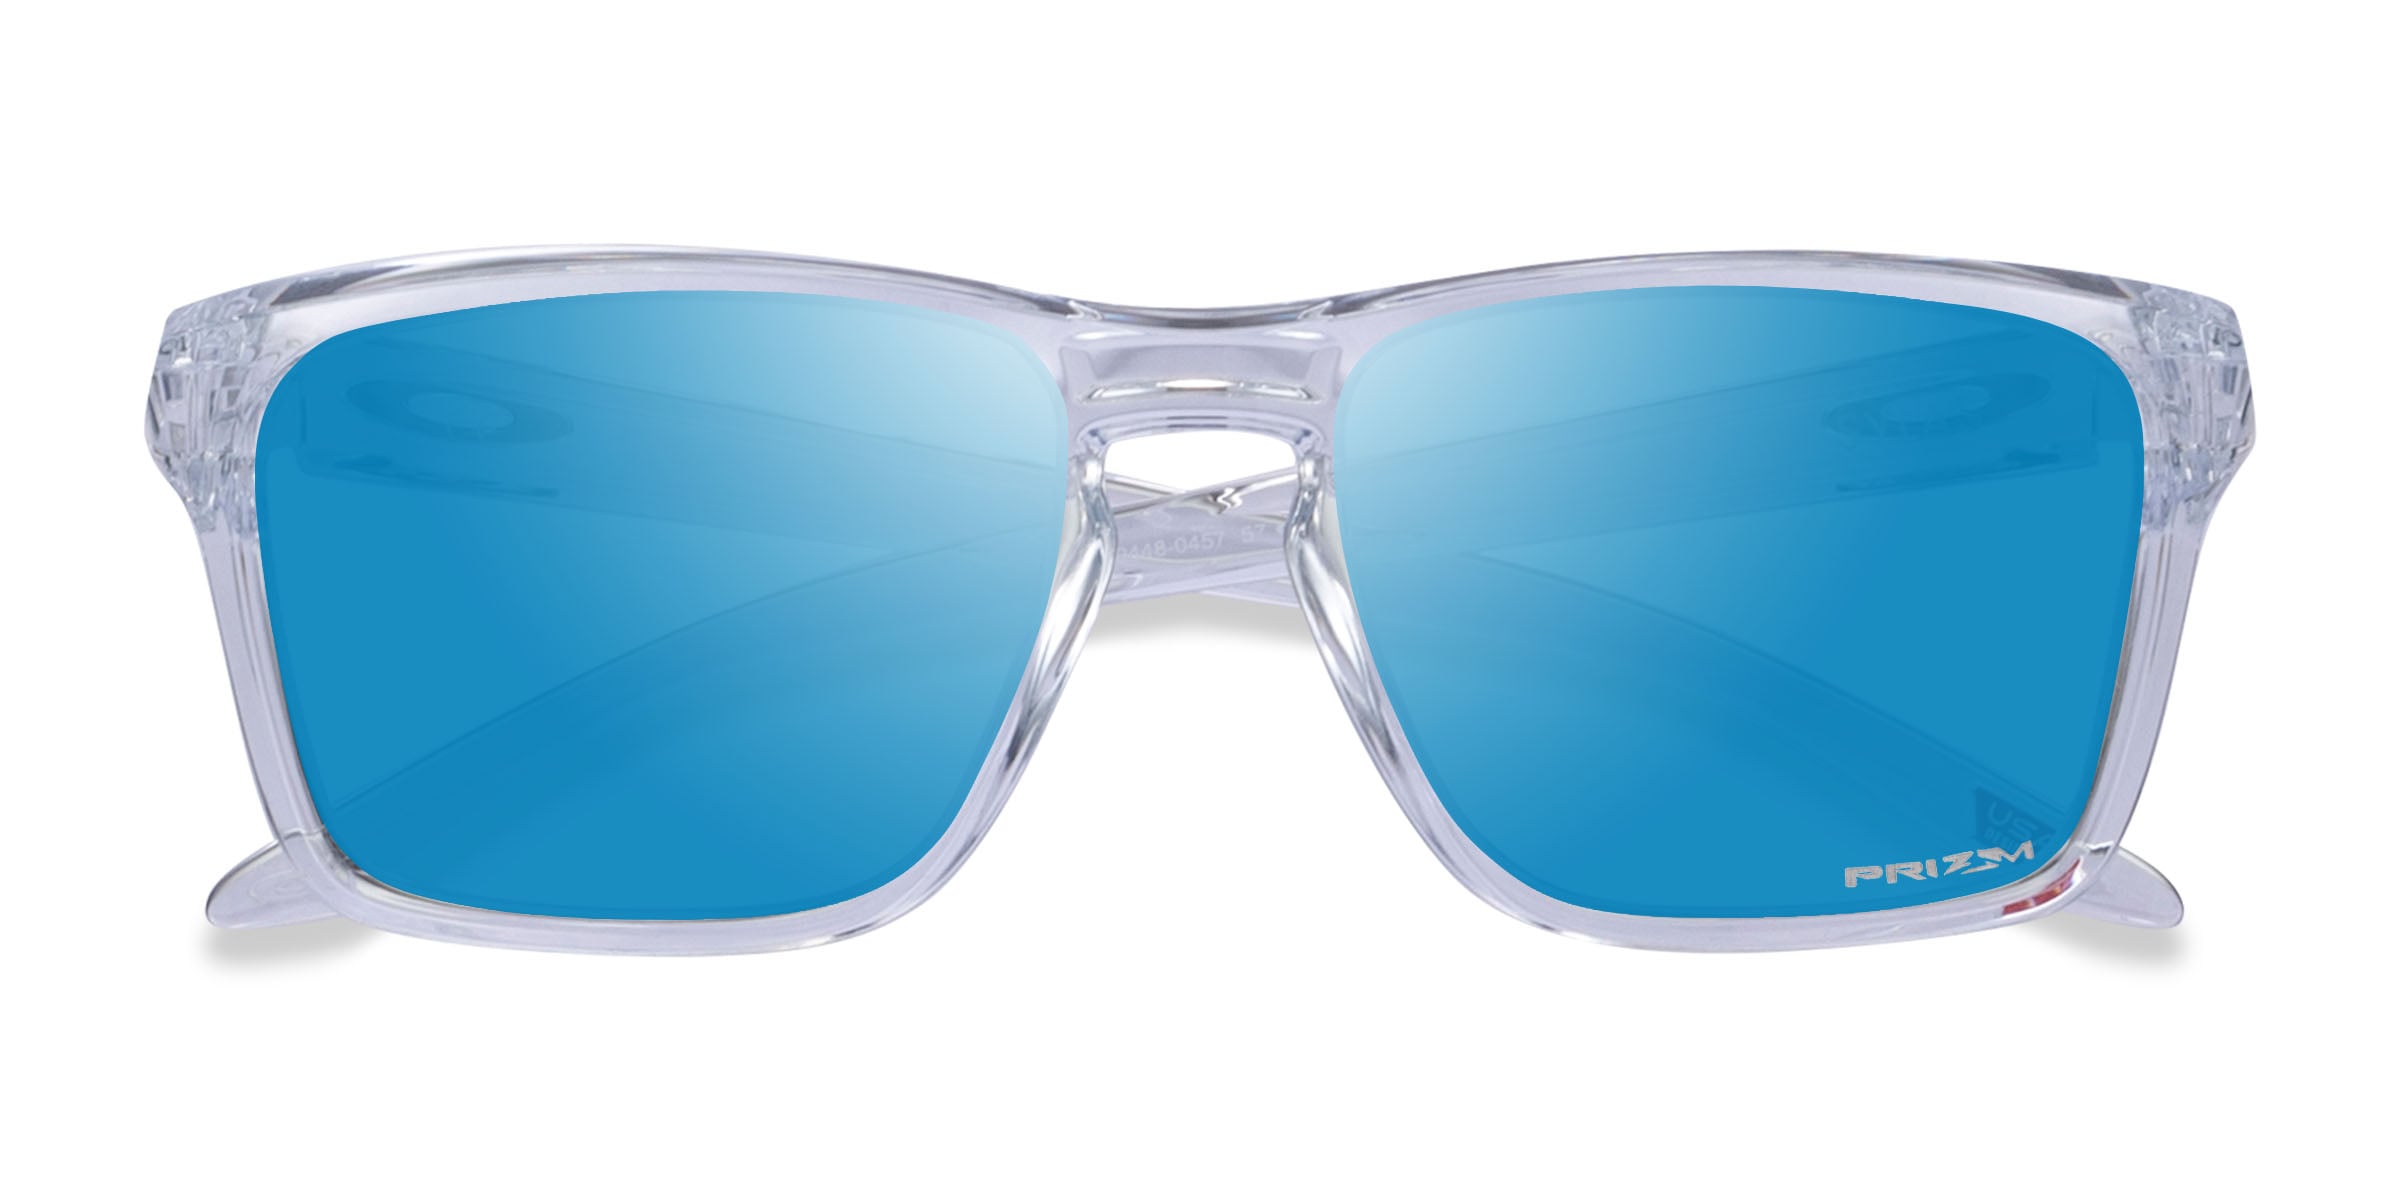 Crystal Gloss/Multimirror Blue Lens Vertec Sunglasses